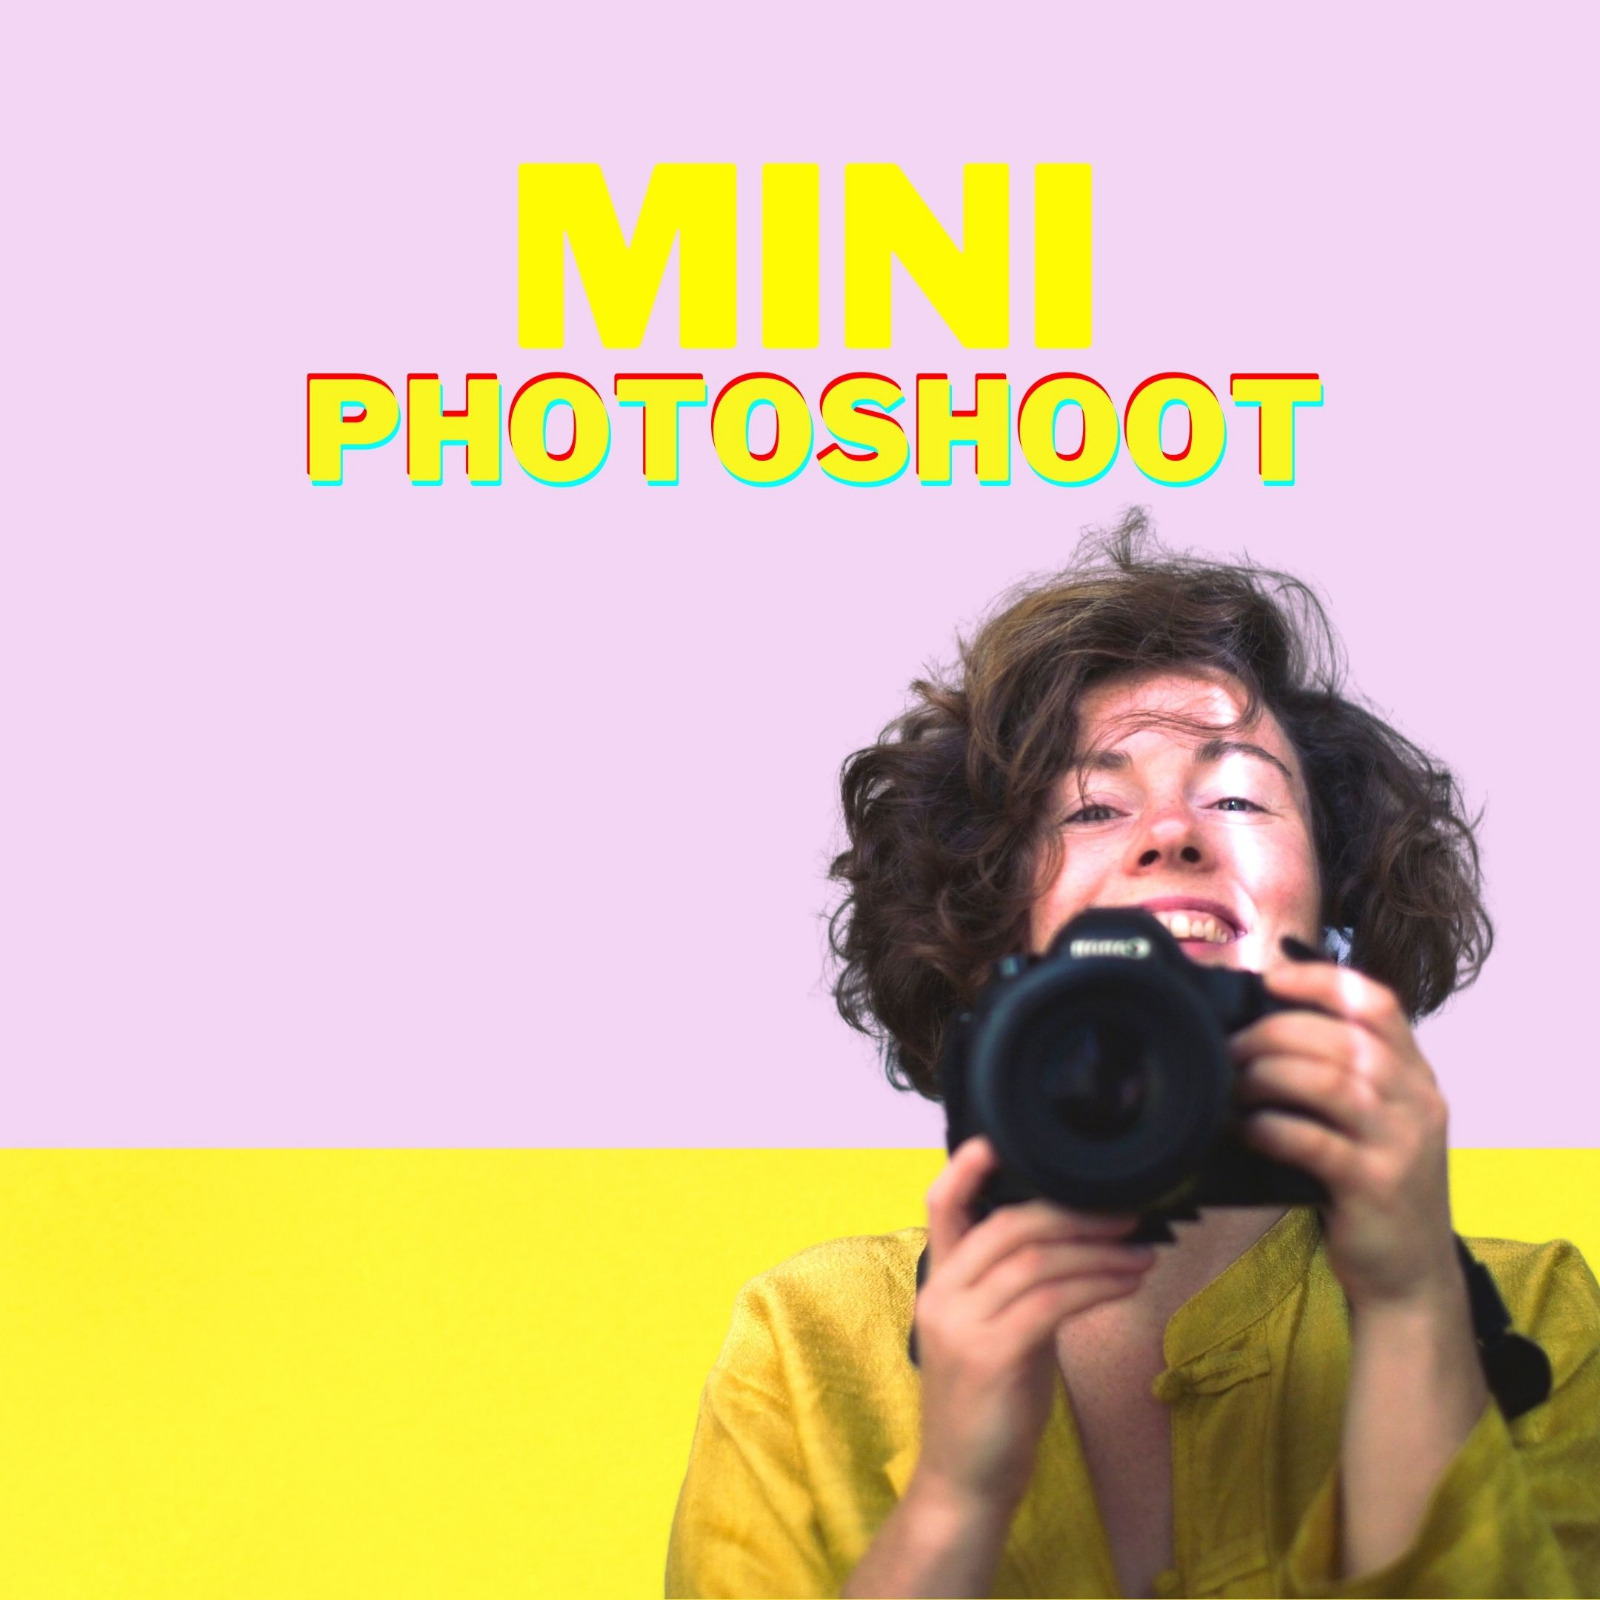 Mini photoshoot (at event venue)